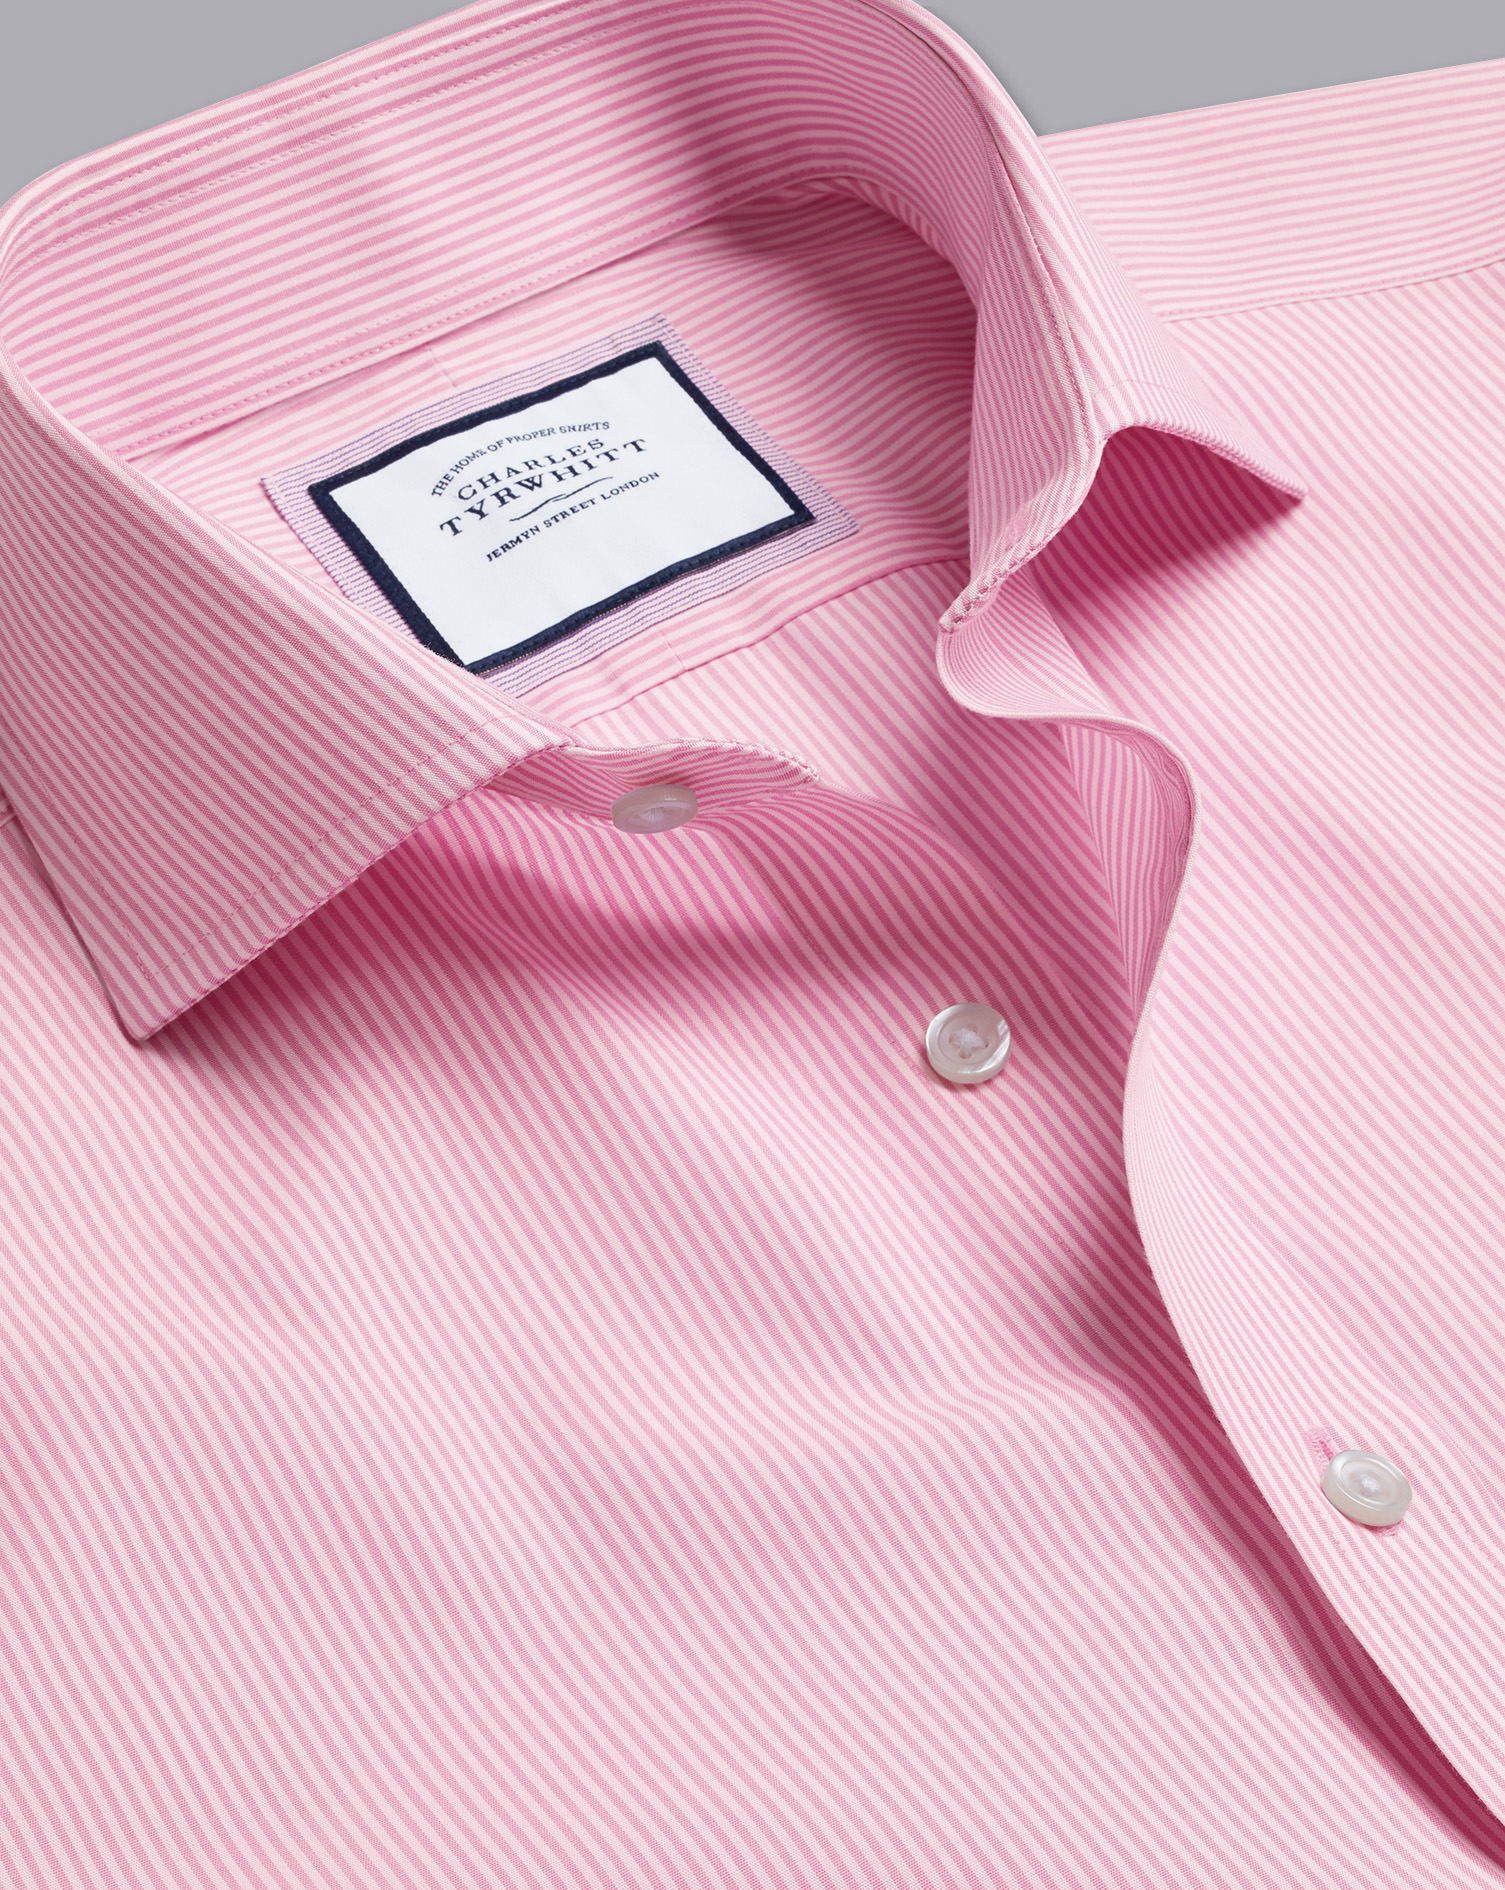 Men's Charles Tyrwhitt Cutaway Collar Non-Iron Bengal Stripe Dress Shirt - Pink Single Cuff Size Sma